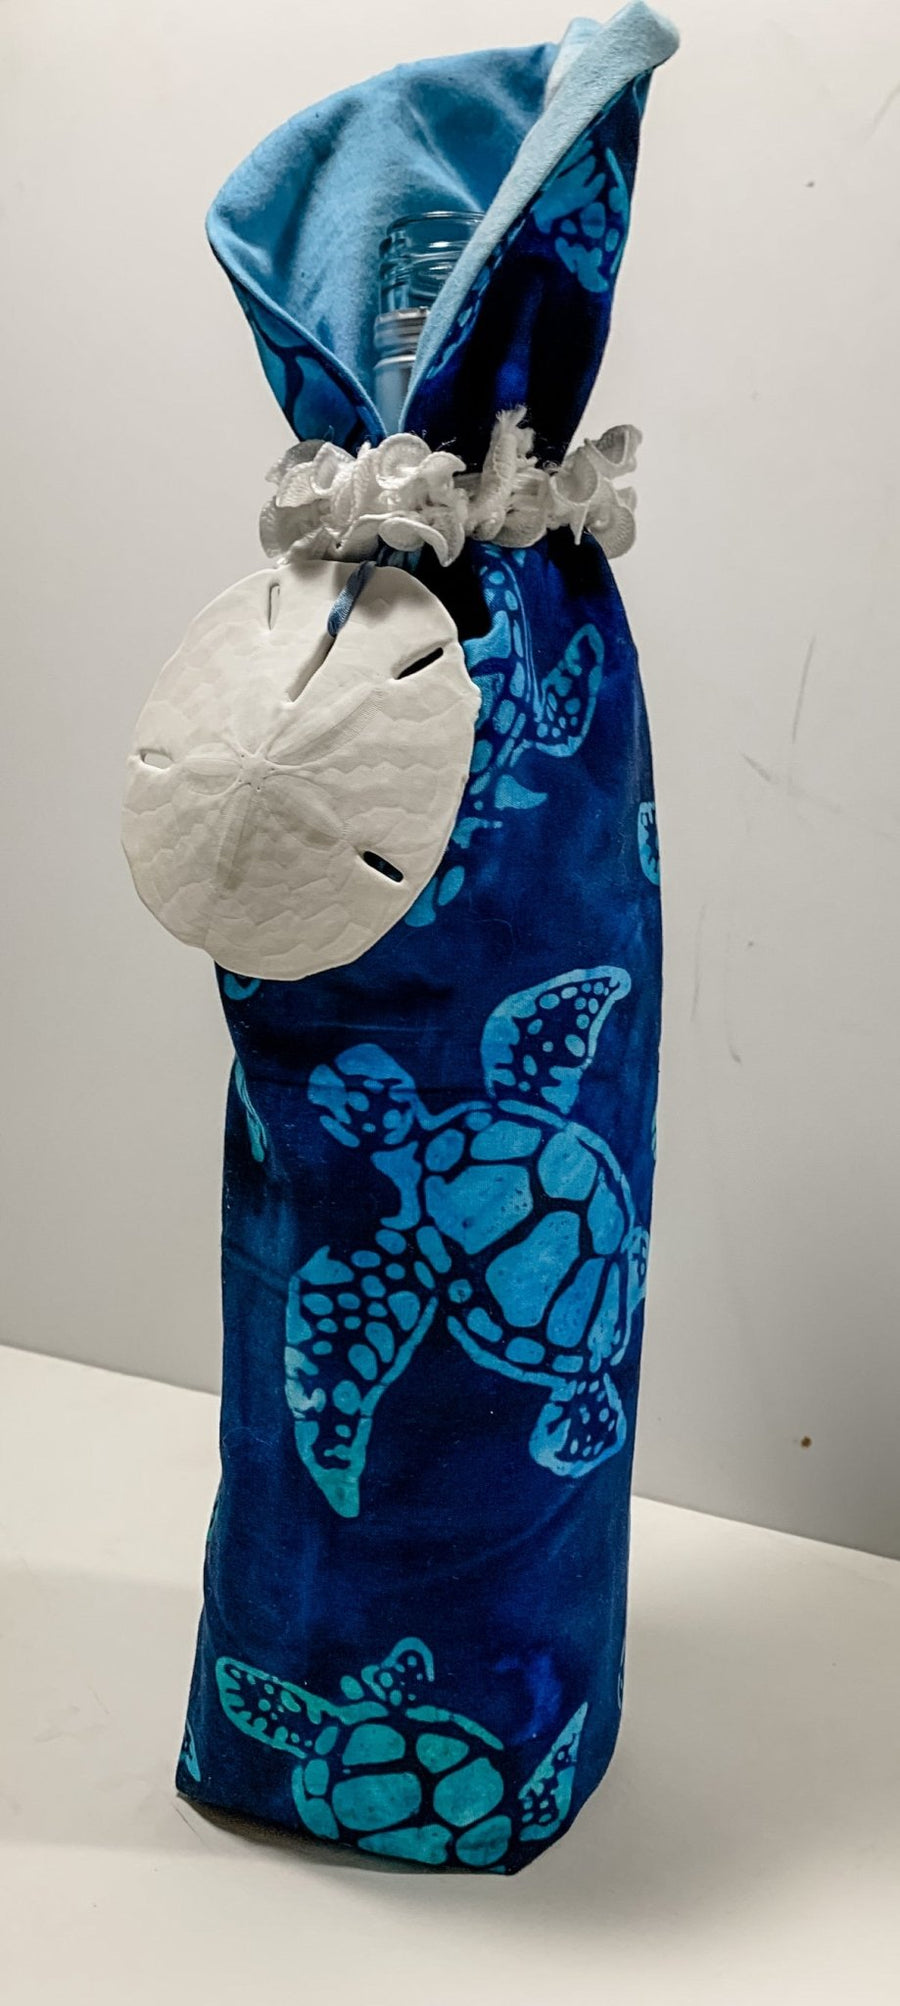 Artistic Turtle Wine Bottle Cover - The Irritable Pelican Artisan Gallery